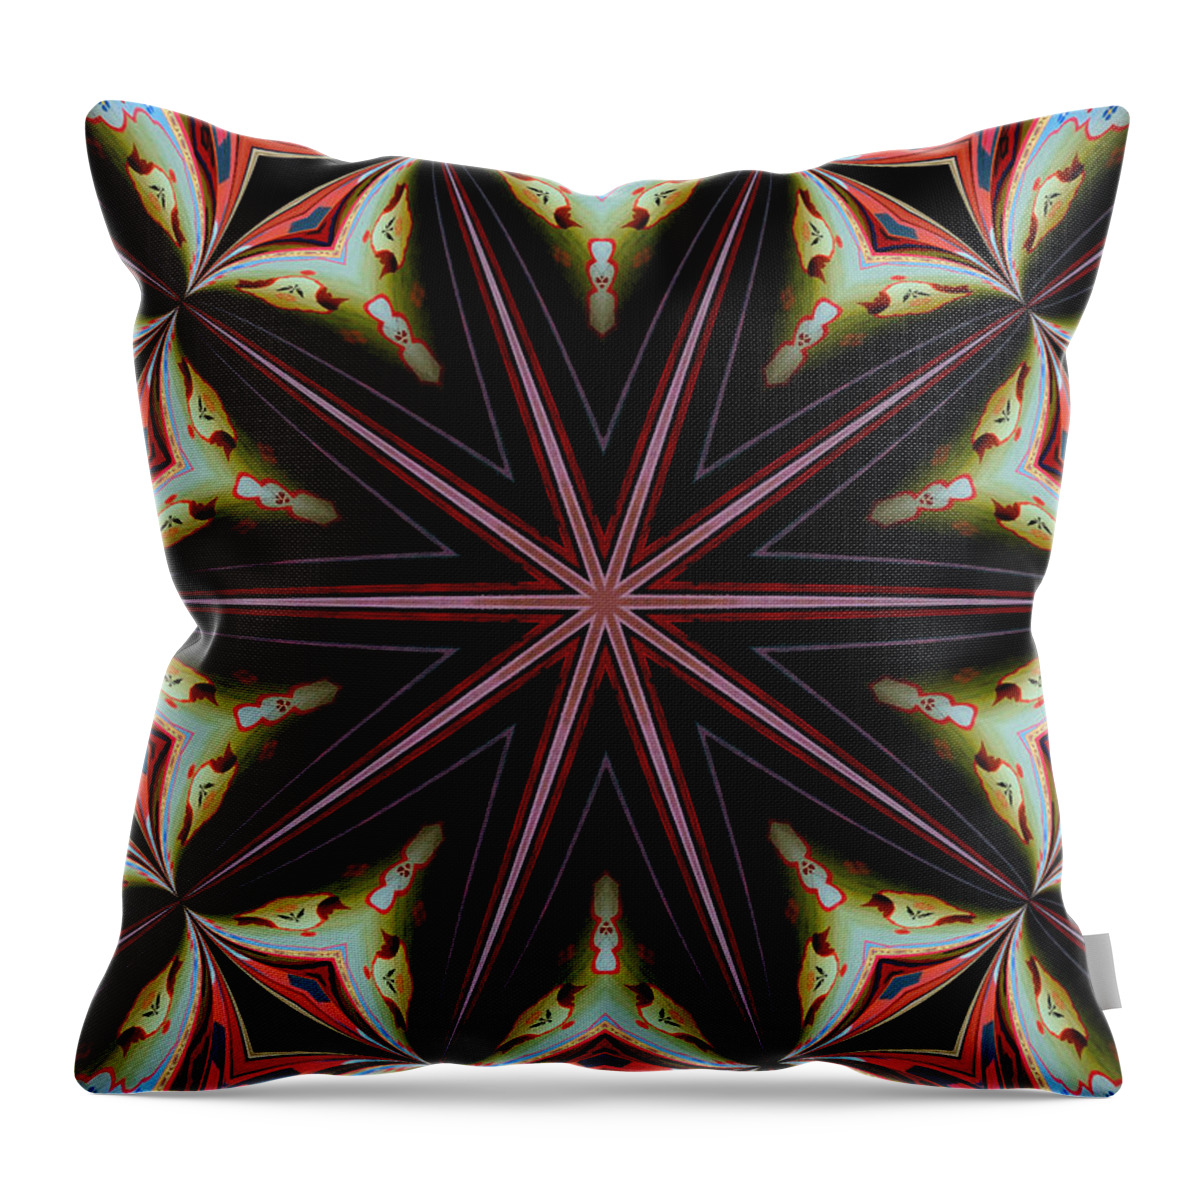 Mandala - Pattern Throw Pillow featuring the painting Mandala - pattern 6 by Jeelan Clark